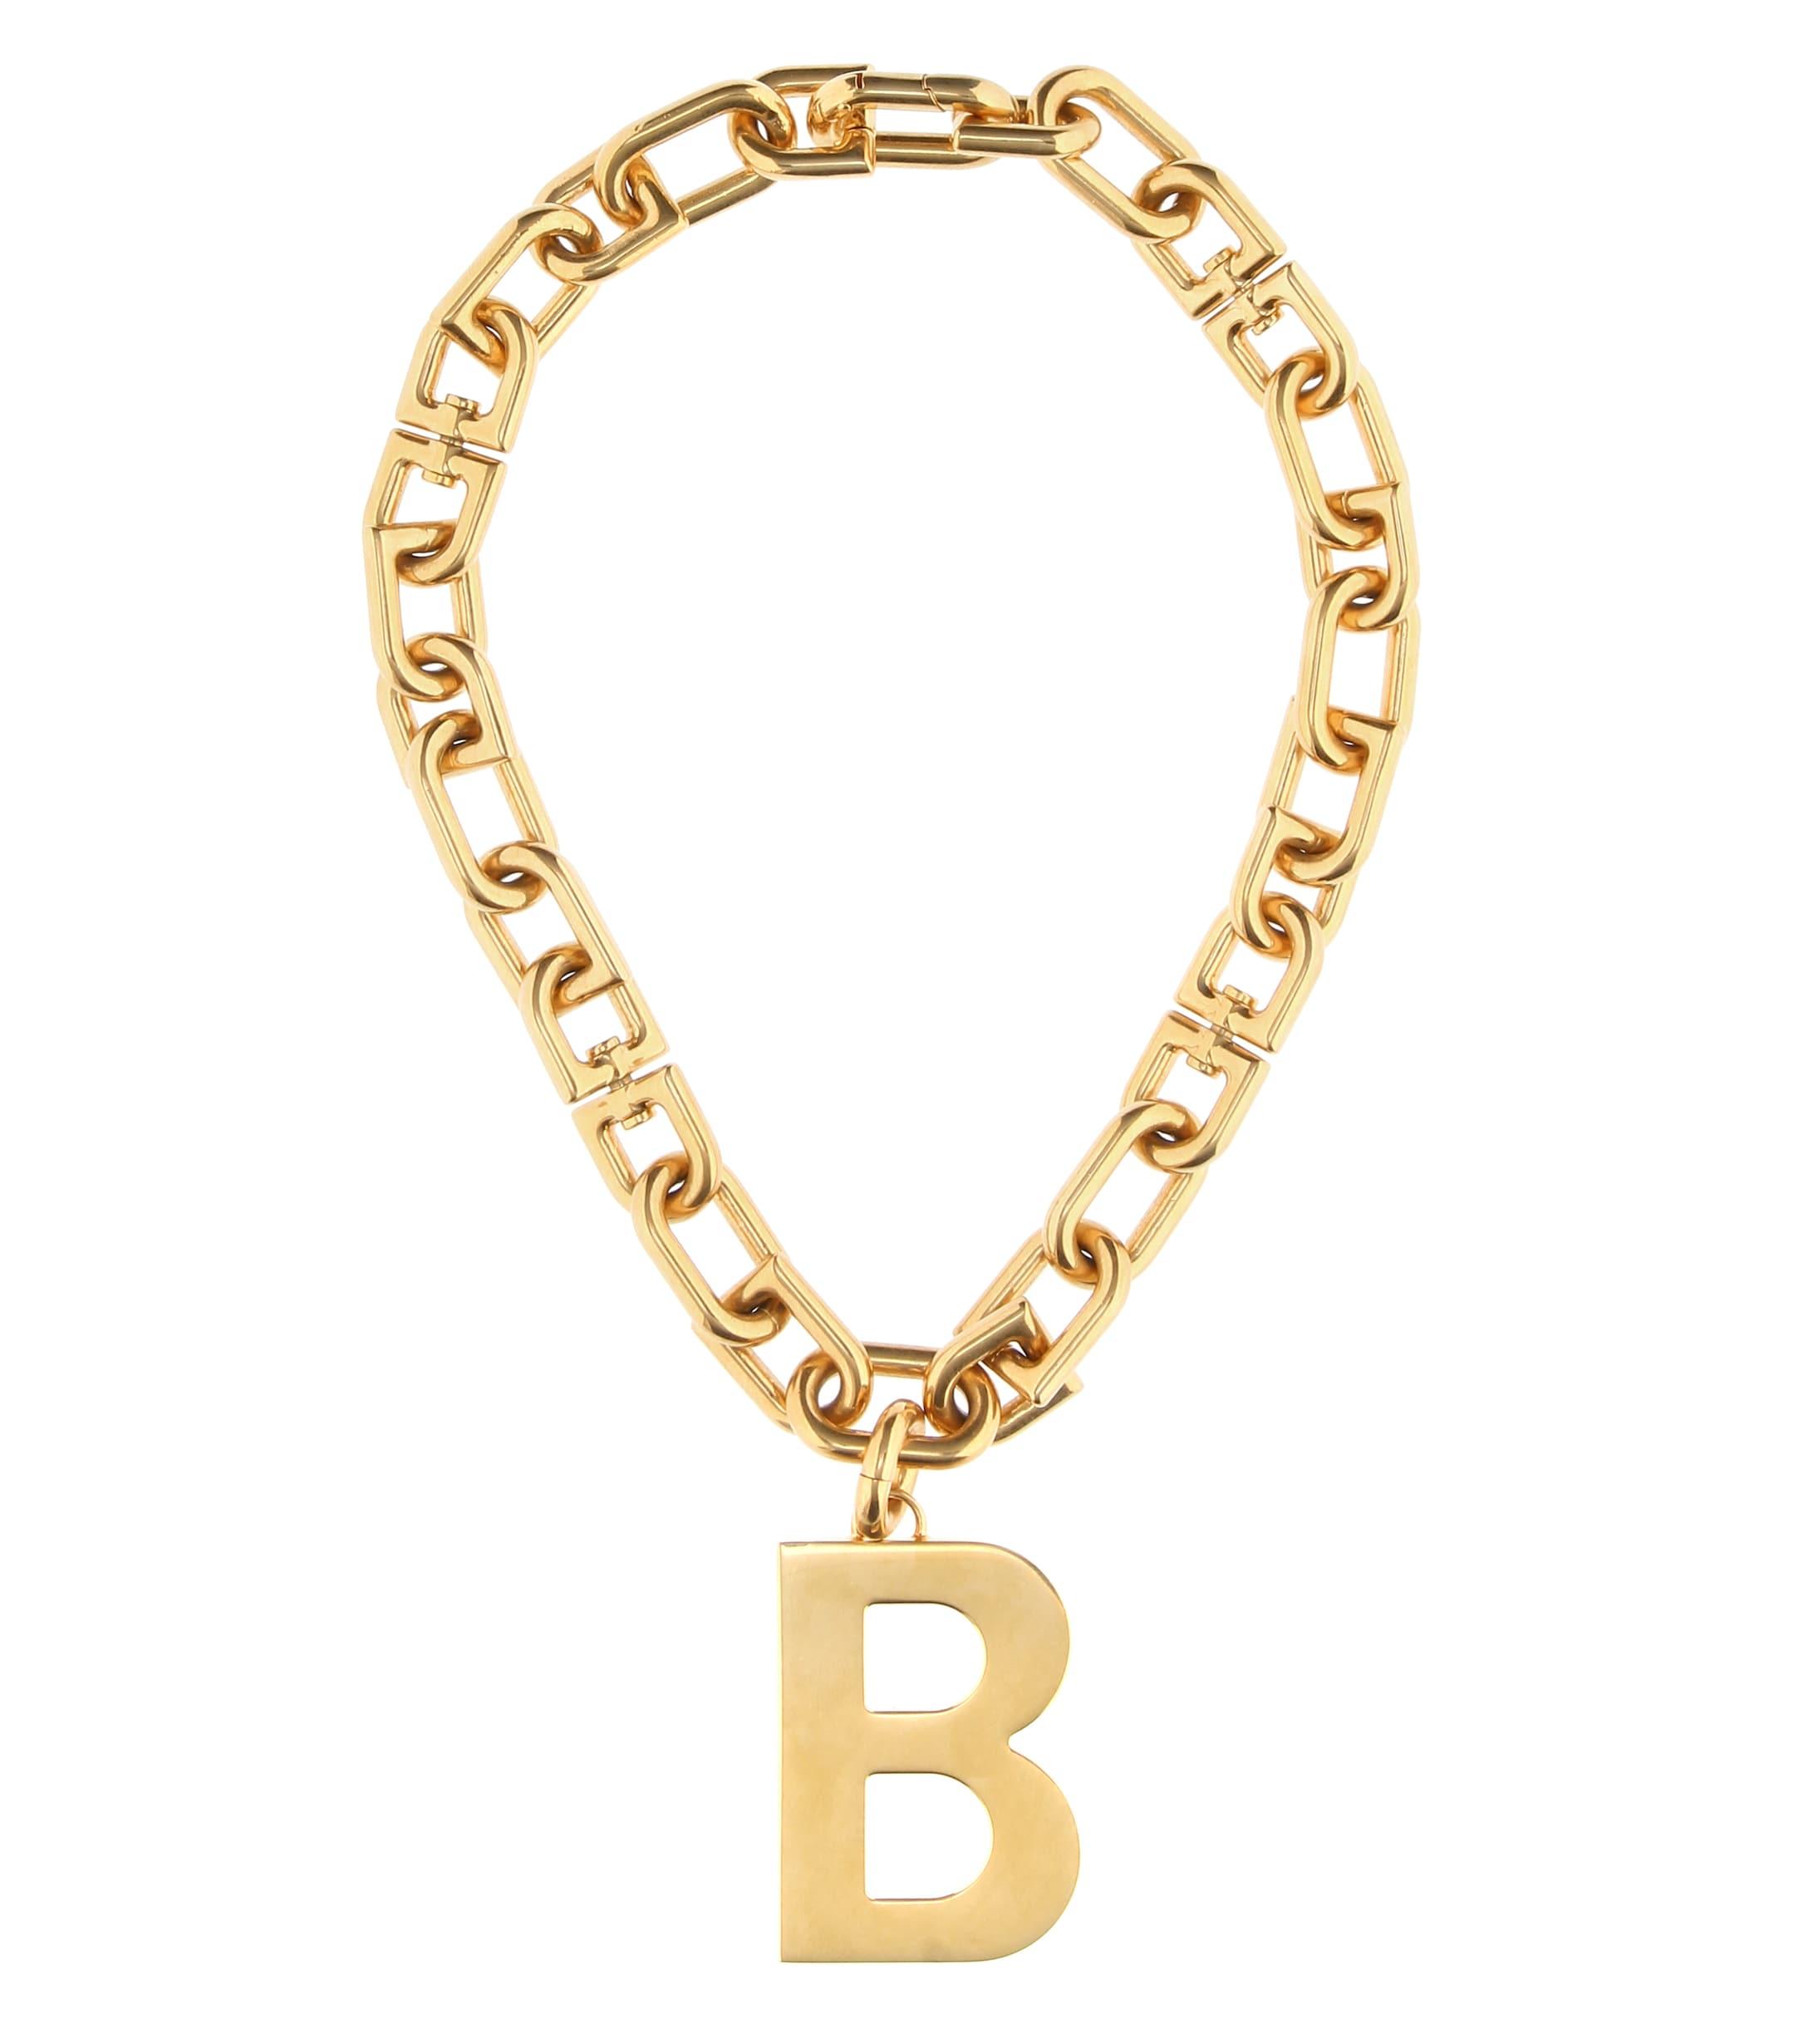 Balenciaga B Chain Necklace in Gold (Metallic) - Lyst